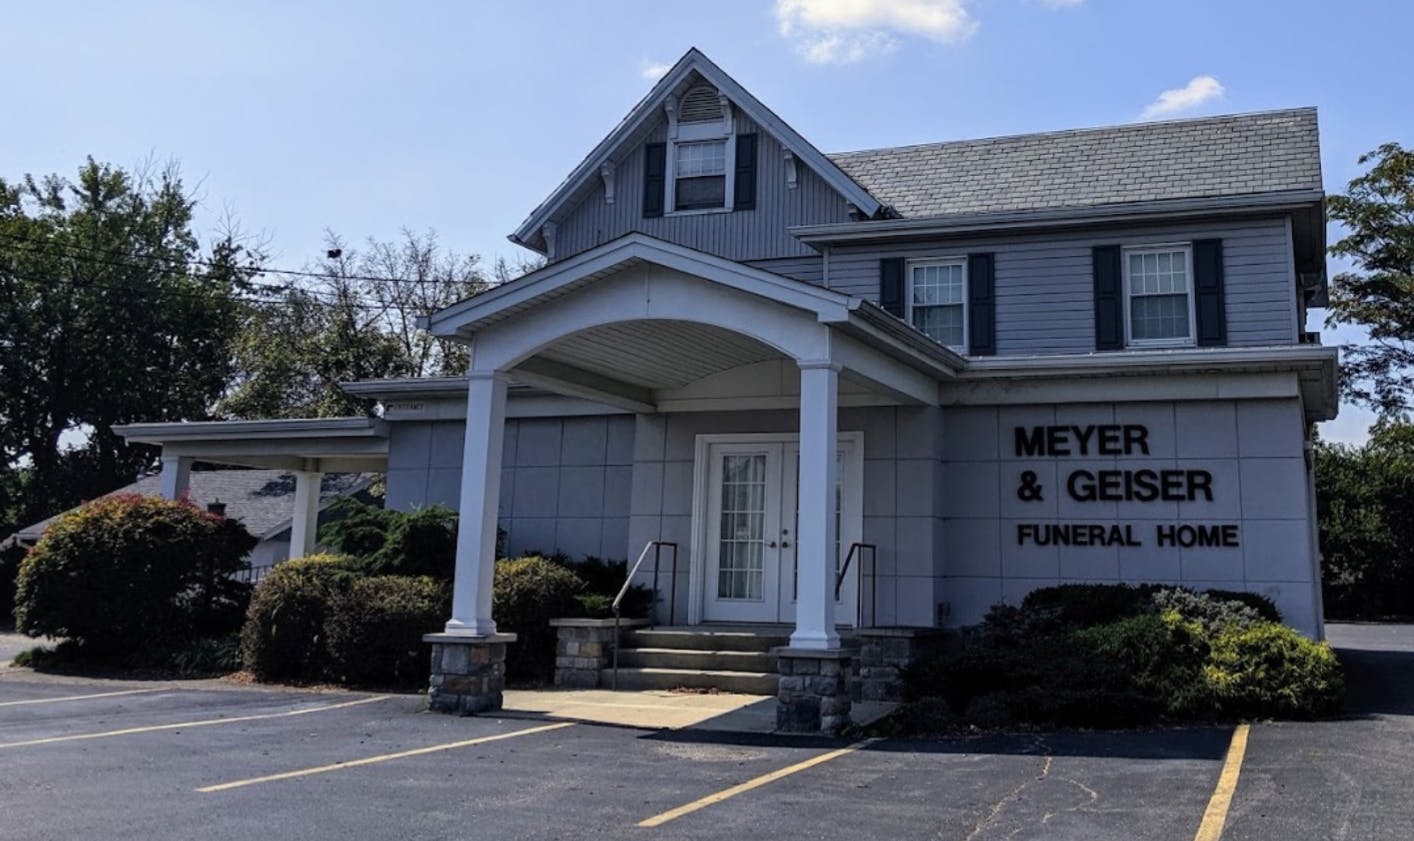 Meyer & Geiser Funeral Home